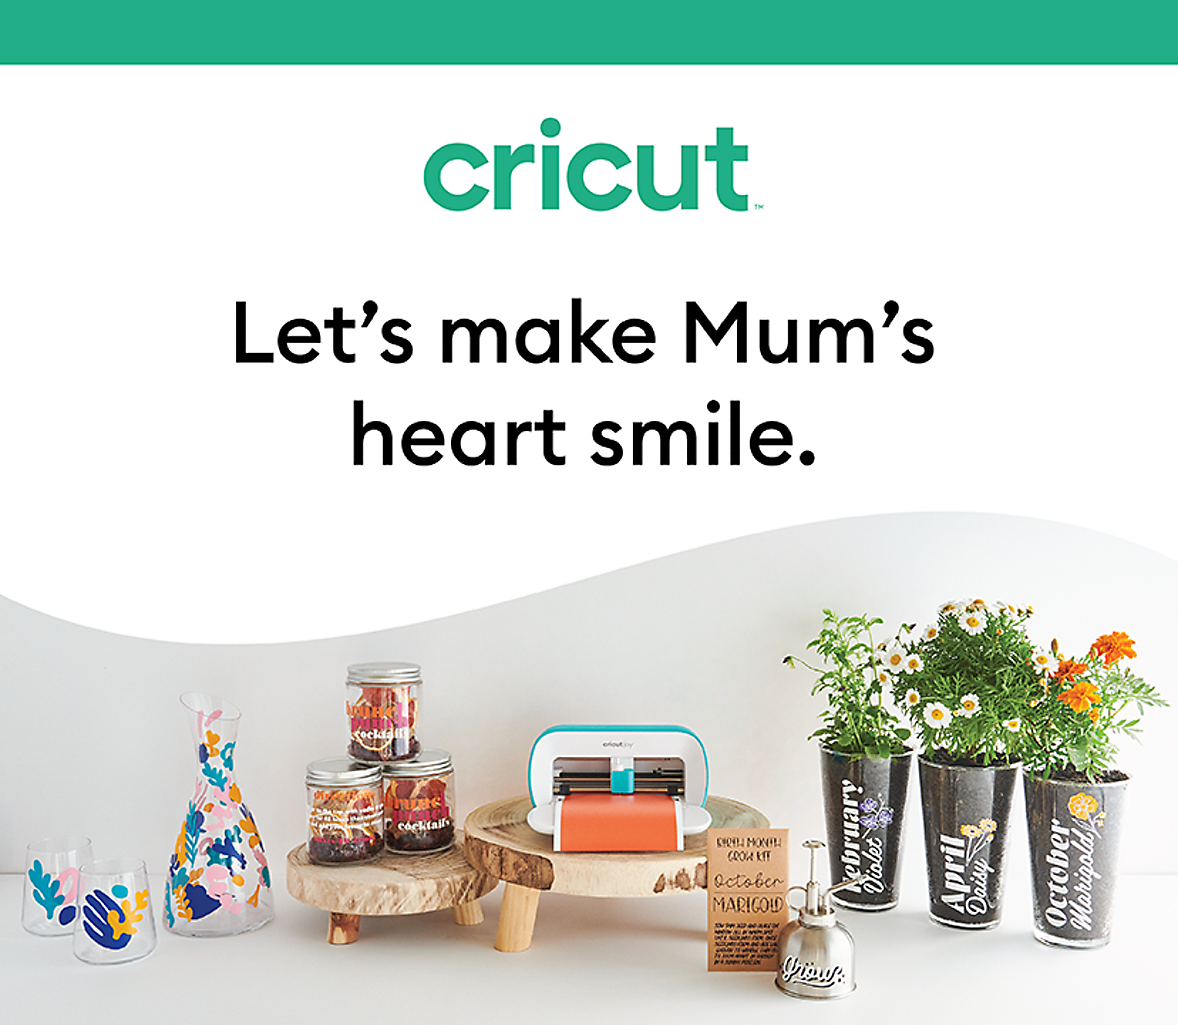 Make mum's heart smile with Cricut